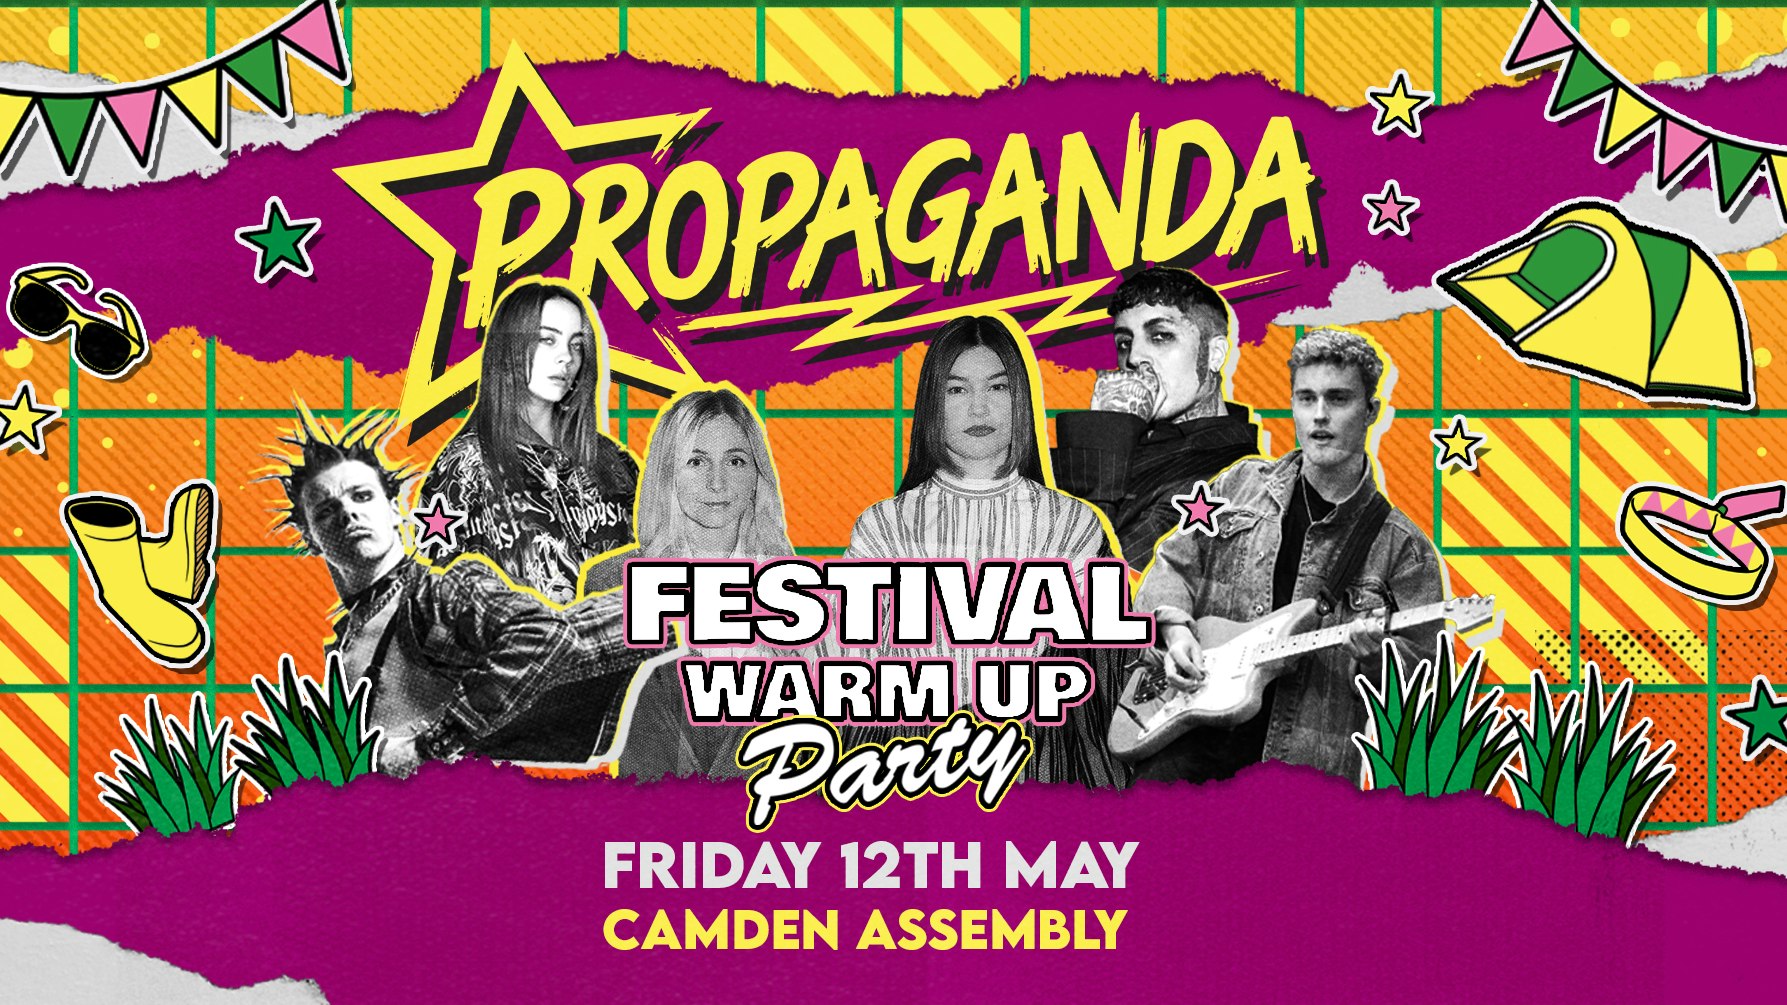 Propaganda London – Festival Warm-up Party!